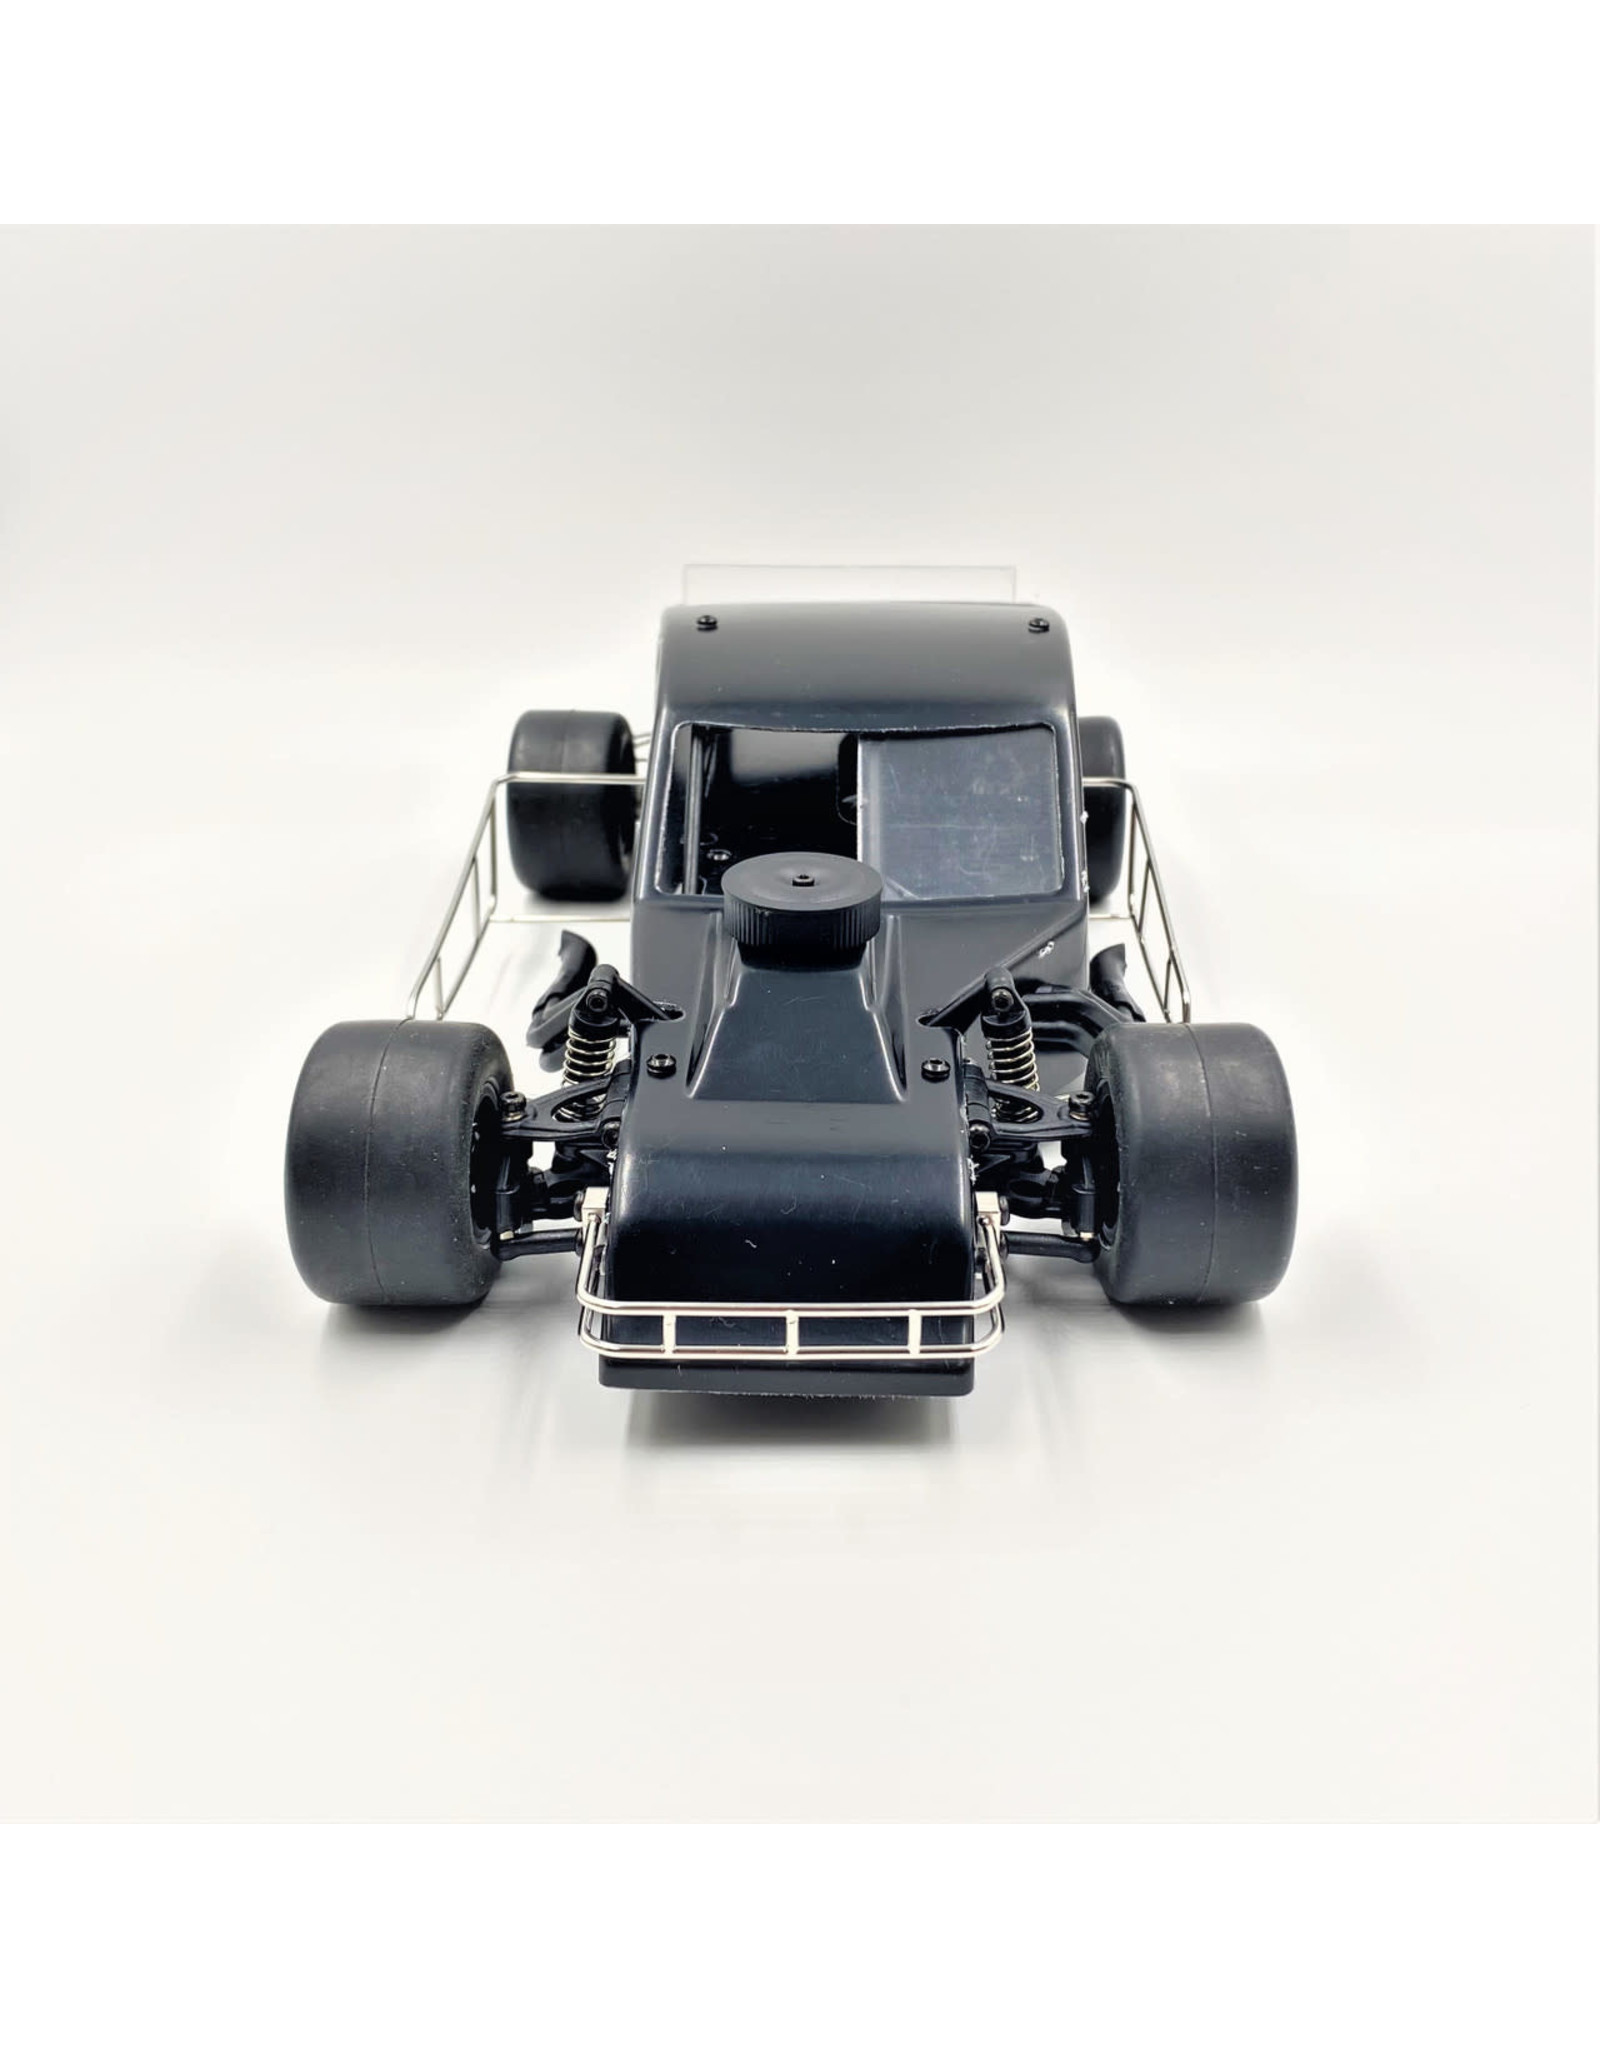 1RC Racing 1/18 Asphalt Modified, Black, RTR